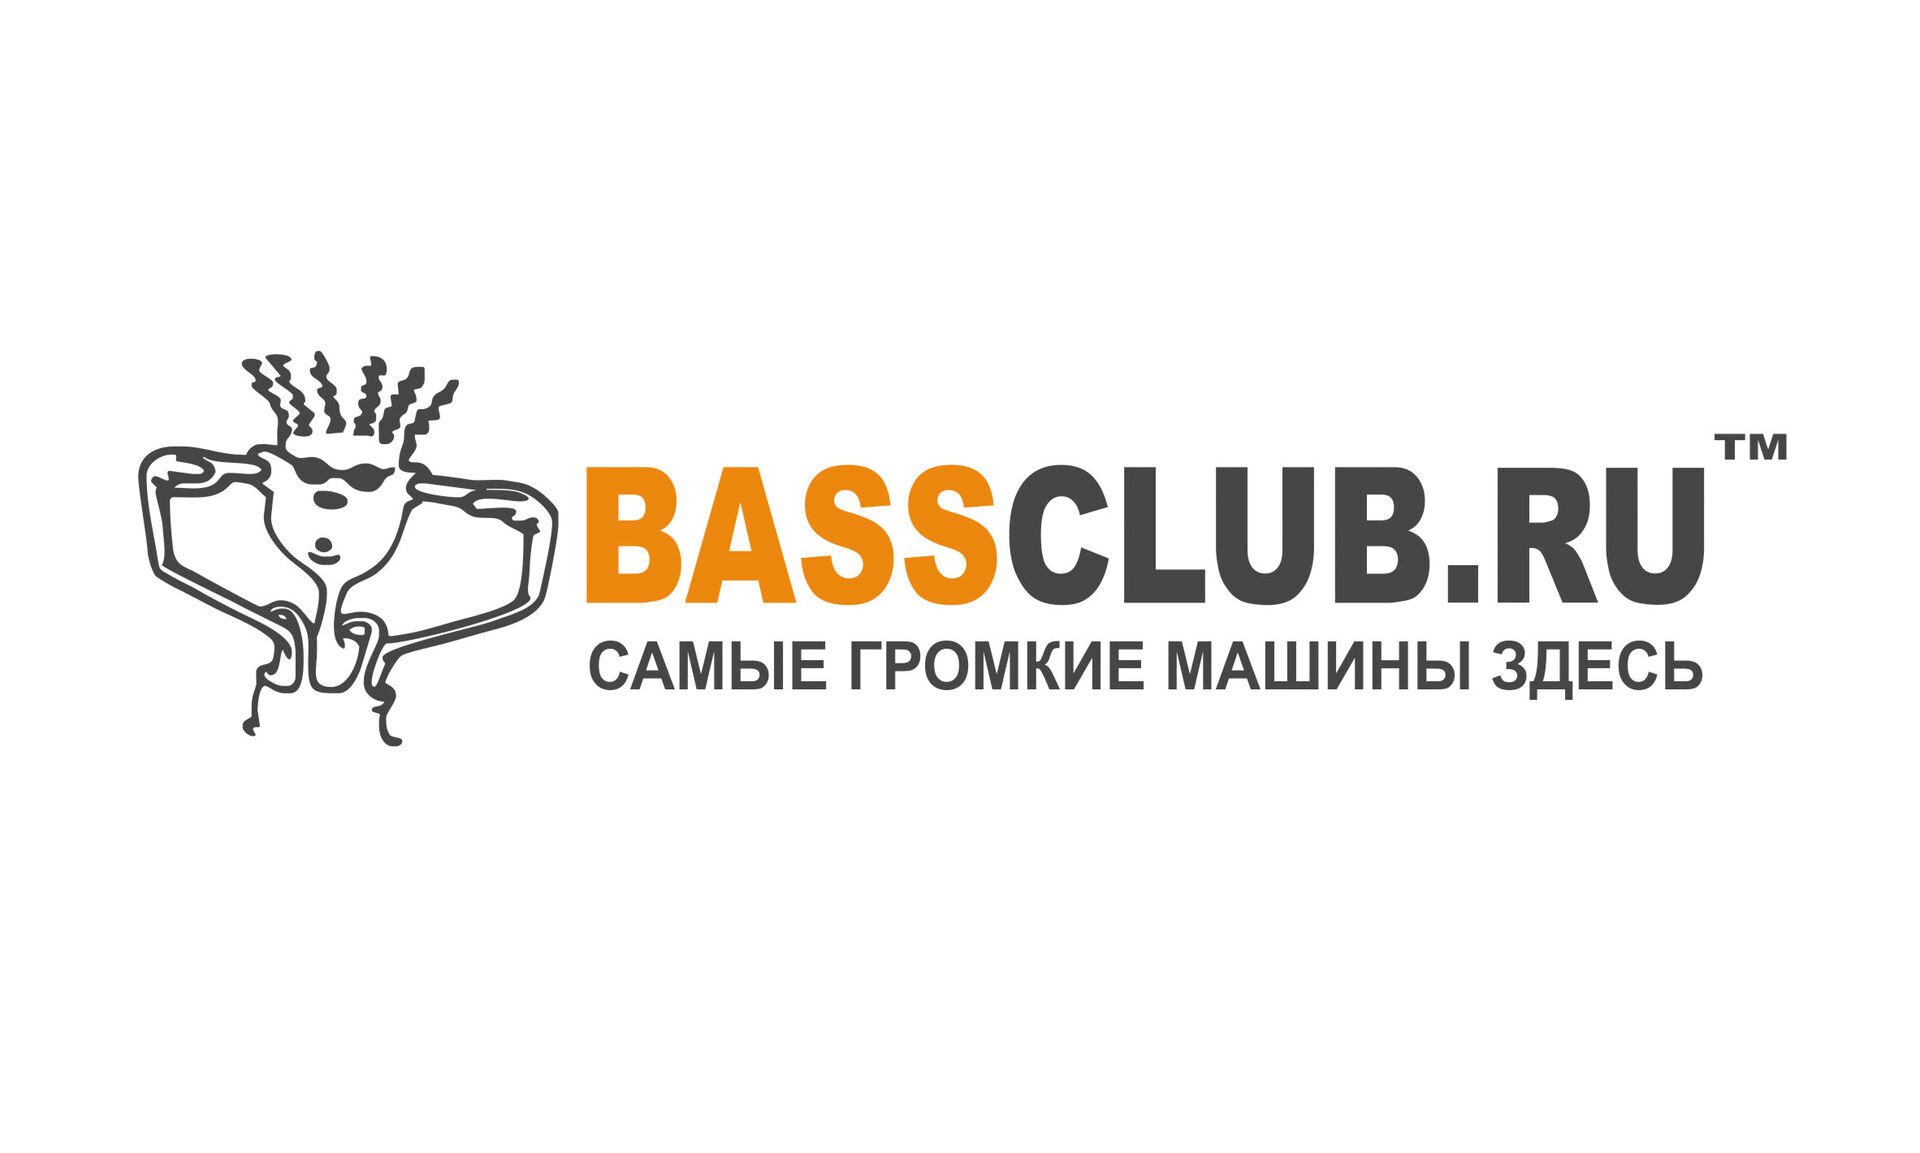 Bass club production. Наклейка bassclub. Клуб БАСЕ. Bass Club наклейка. Басс клуб продакшн.